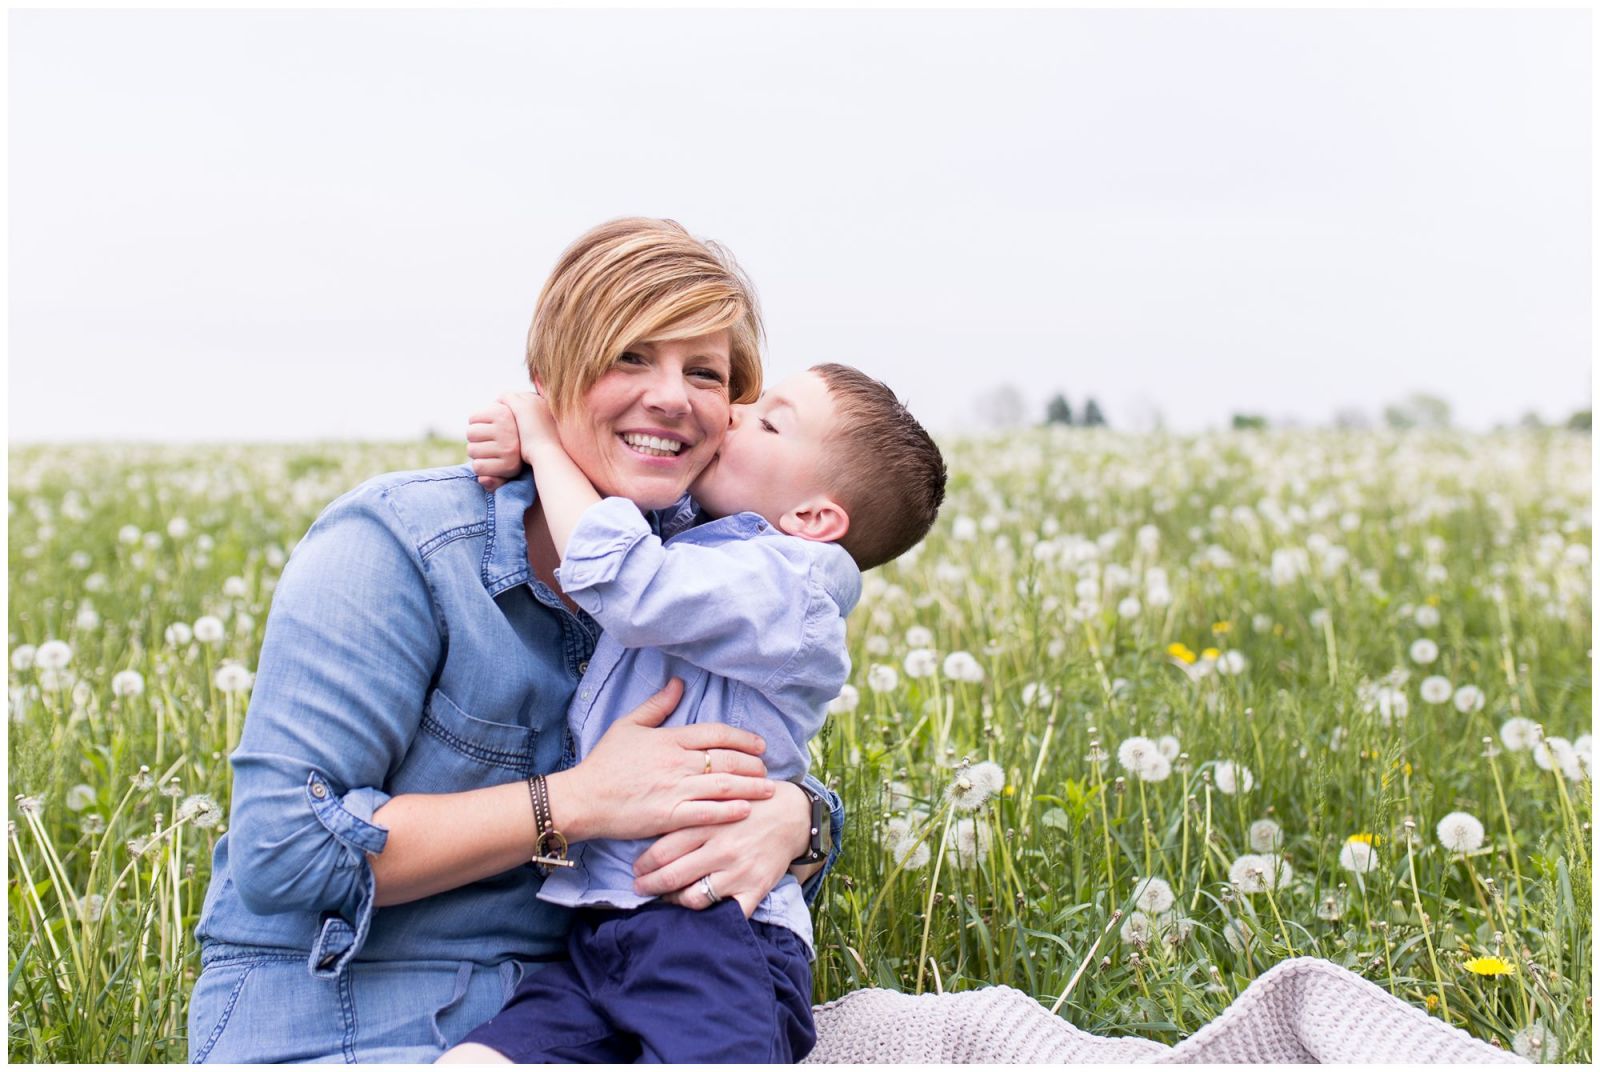 mom and son in field of dandelions at Wildkat Creek Reservoir Park in Kokomo Indiana